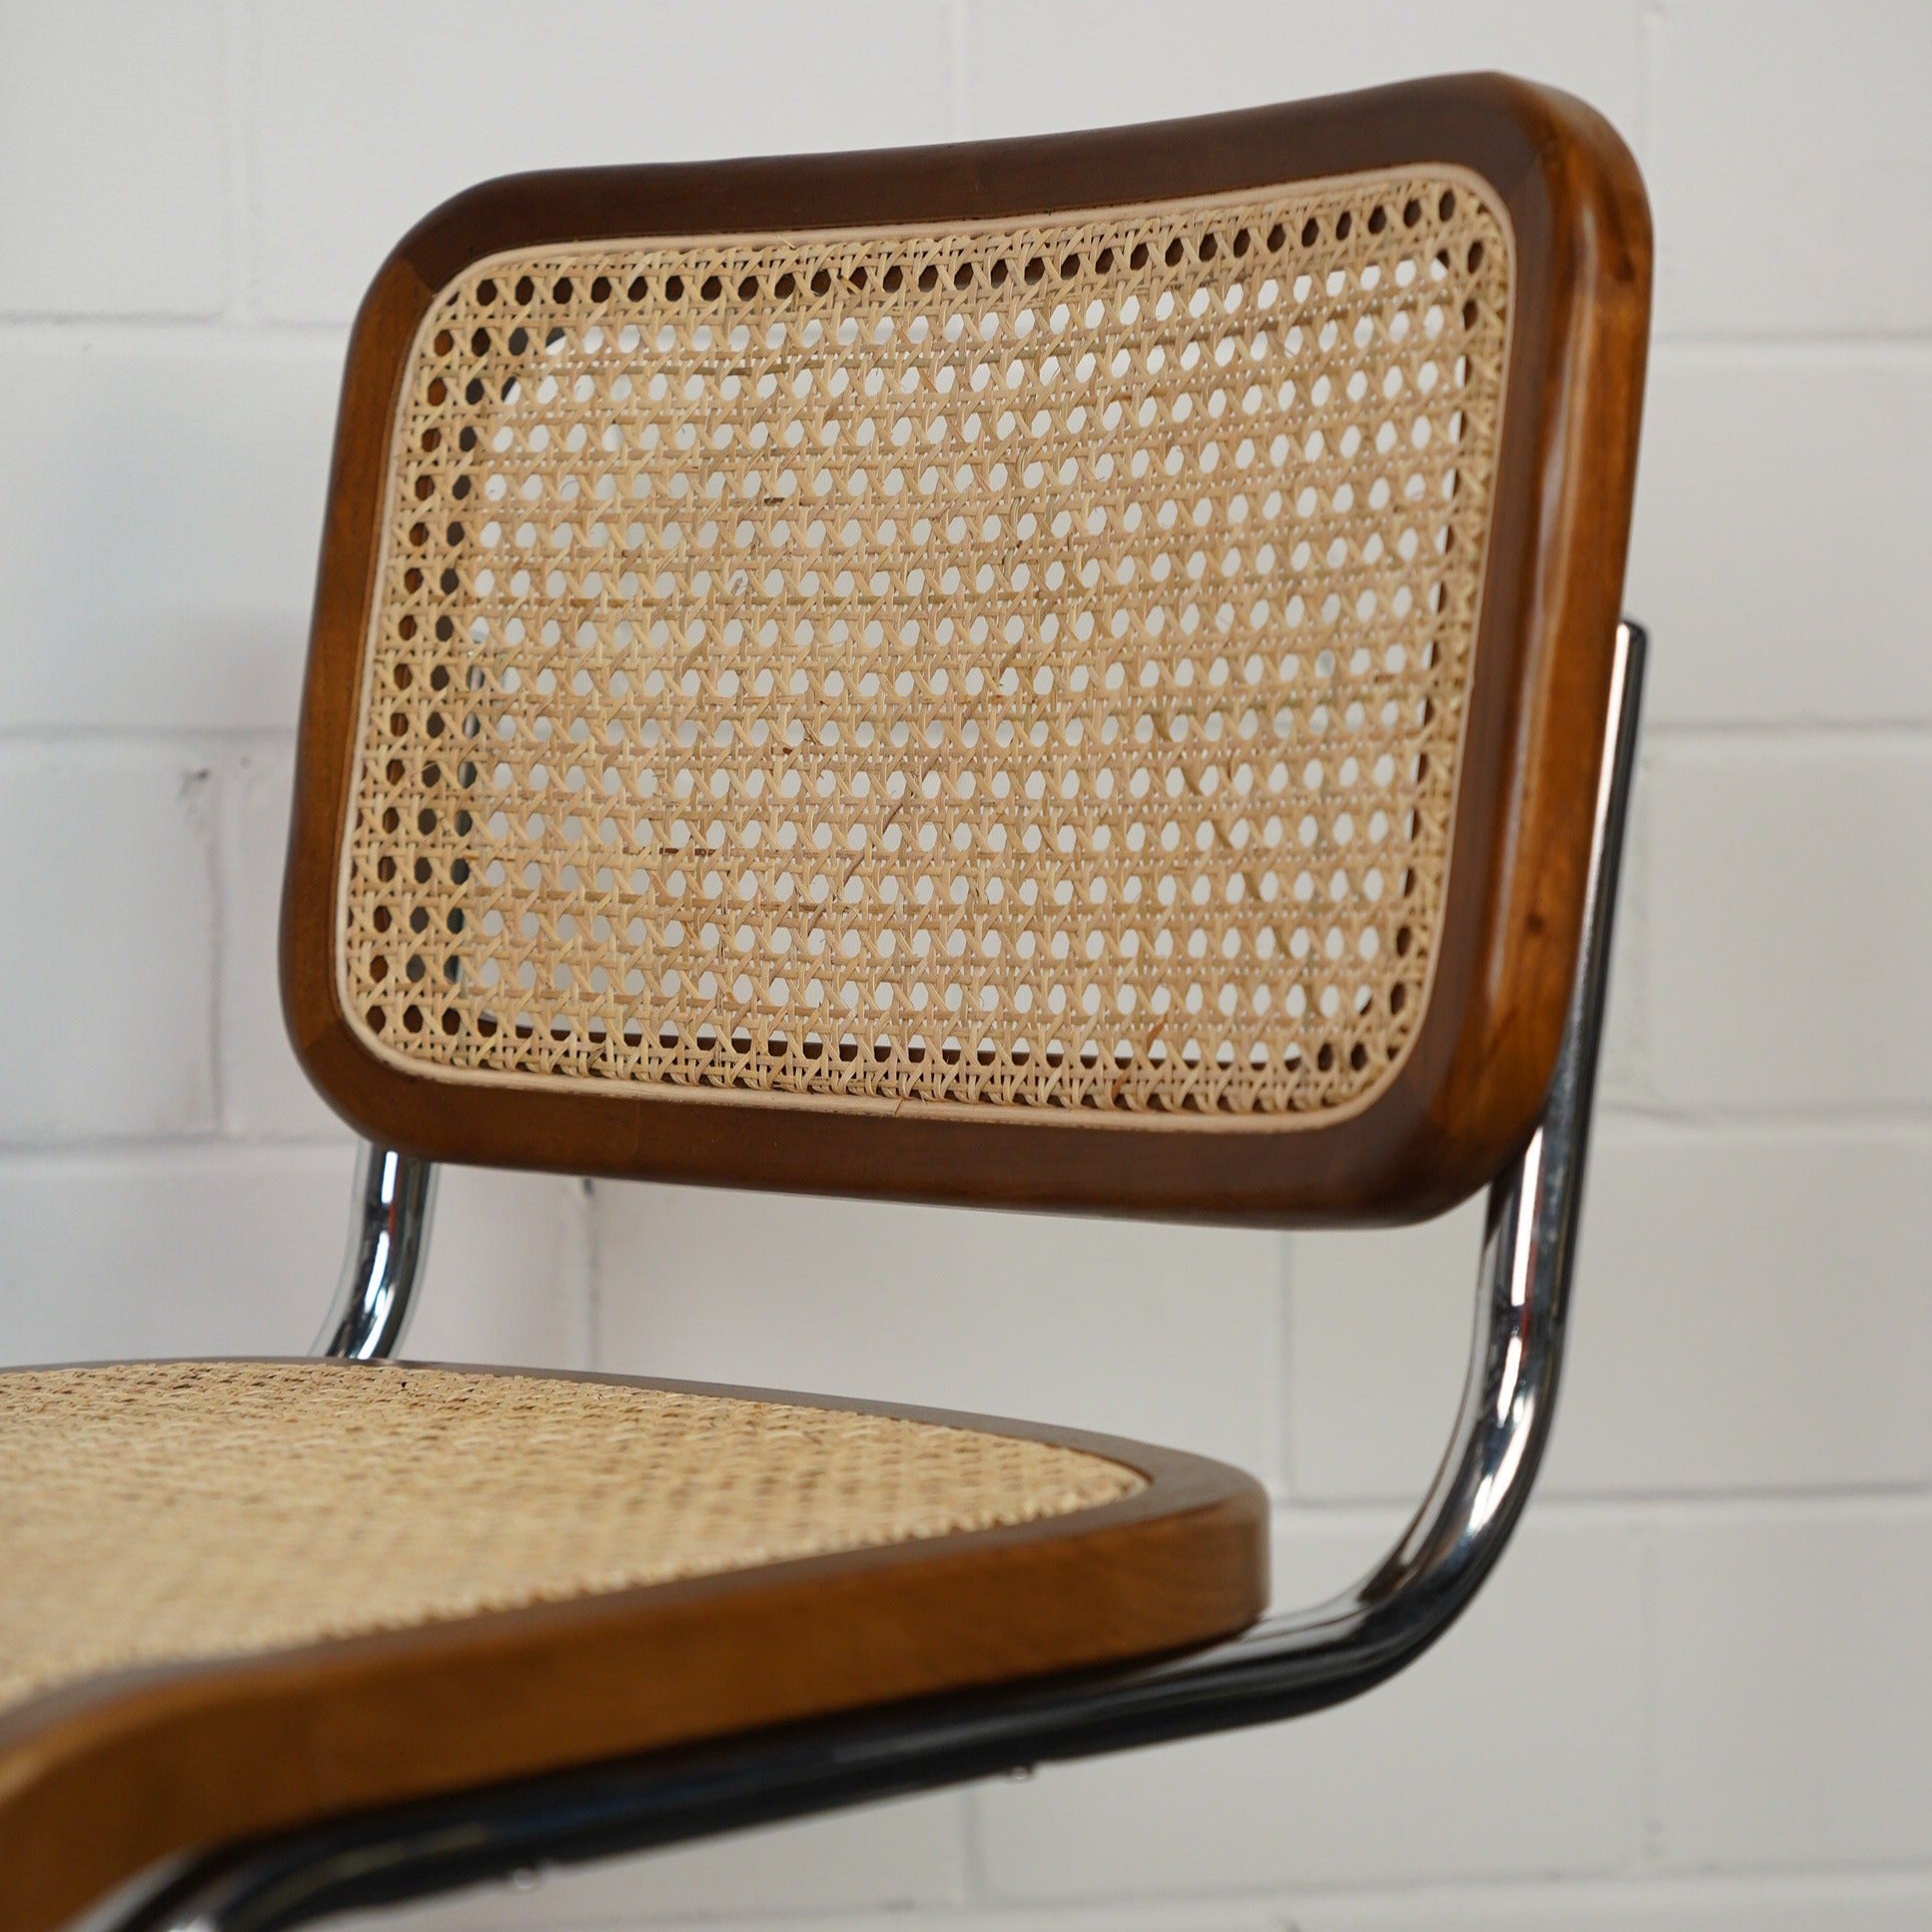 Marcel Breuer Cesca Replica Chair | Teak V1